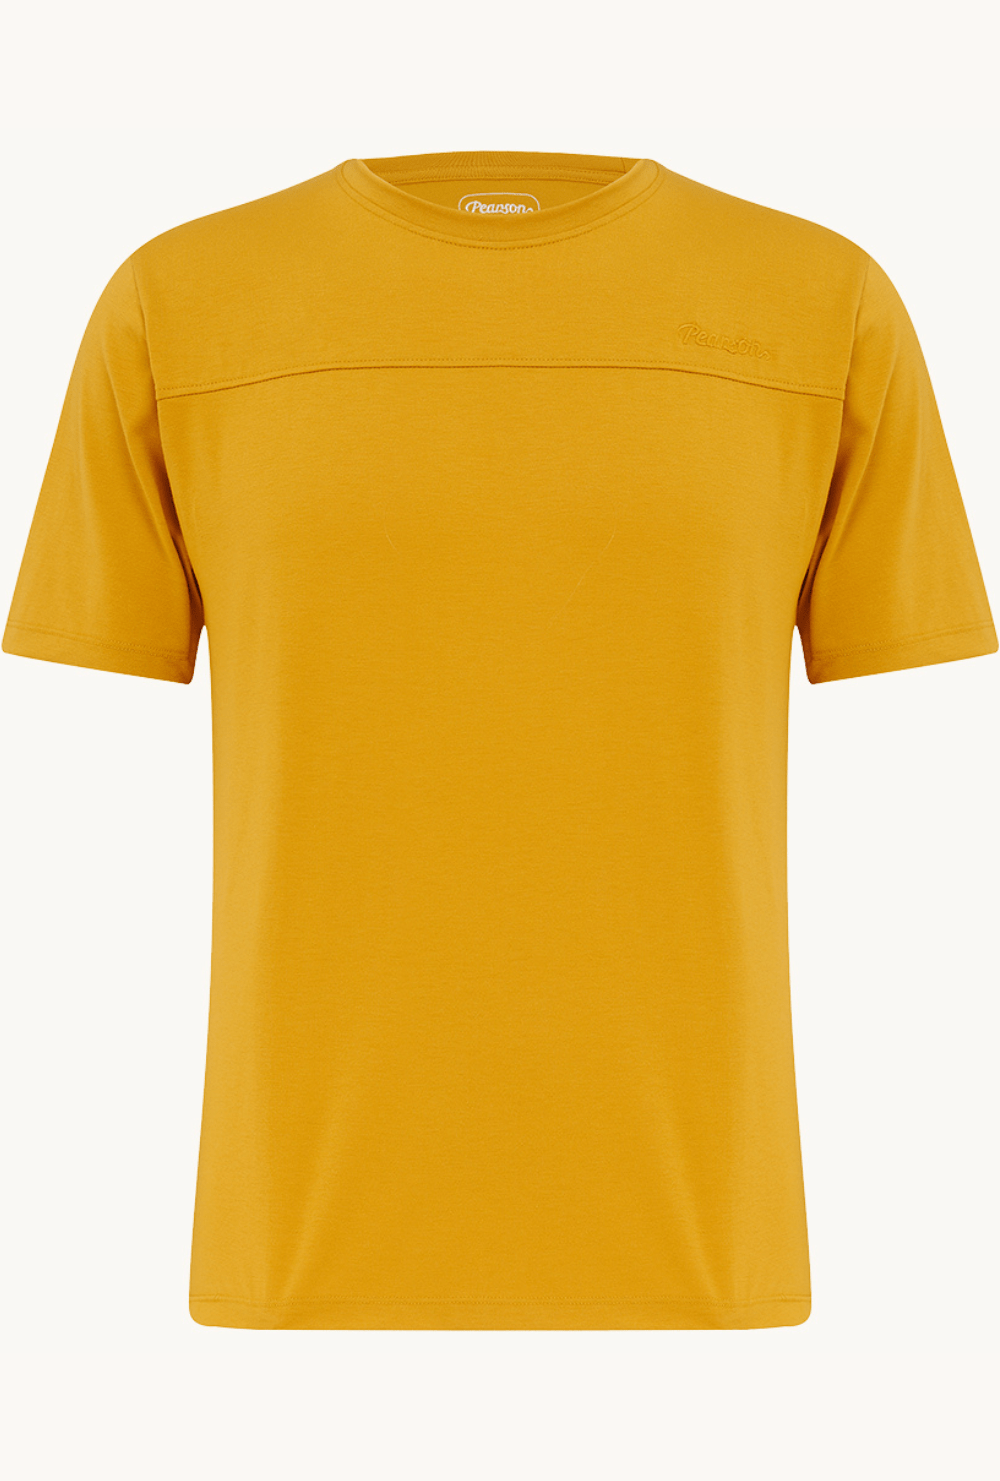 Pearson 1860  High DaysandHolidays - Cycling T-shirt Ochre  Ochre / Xx-large